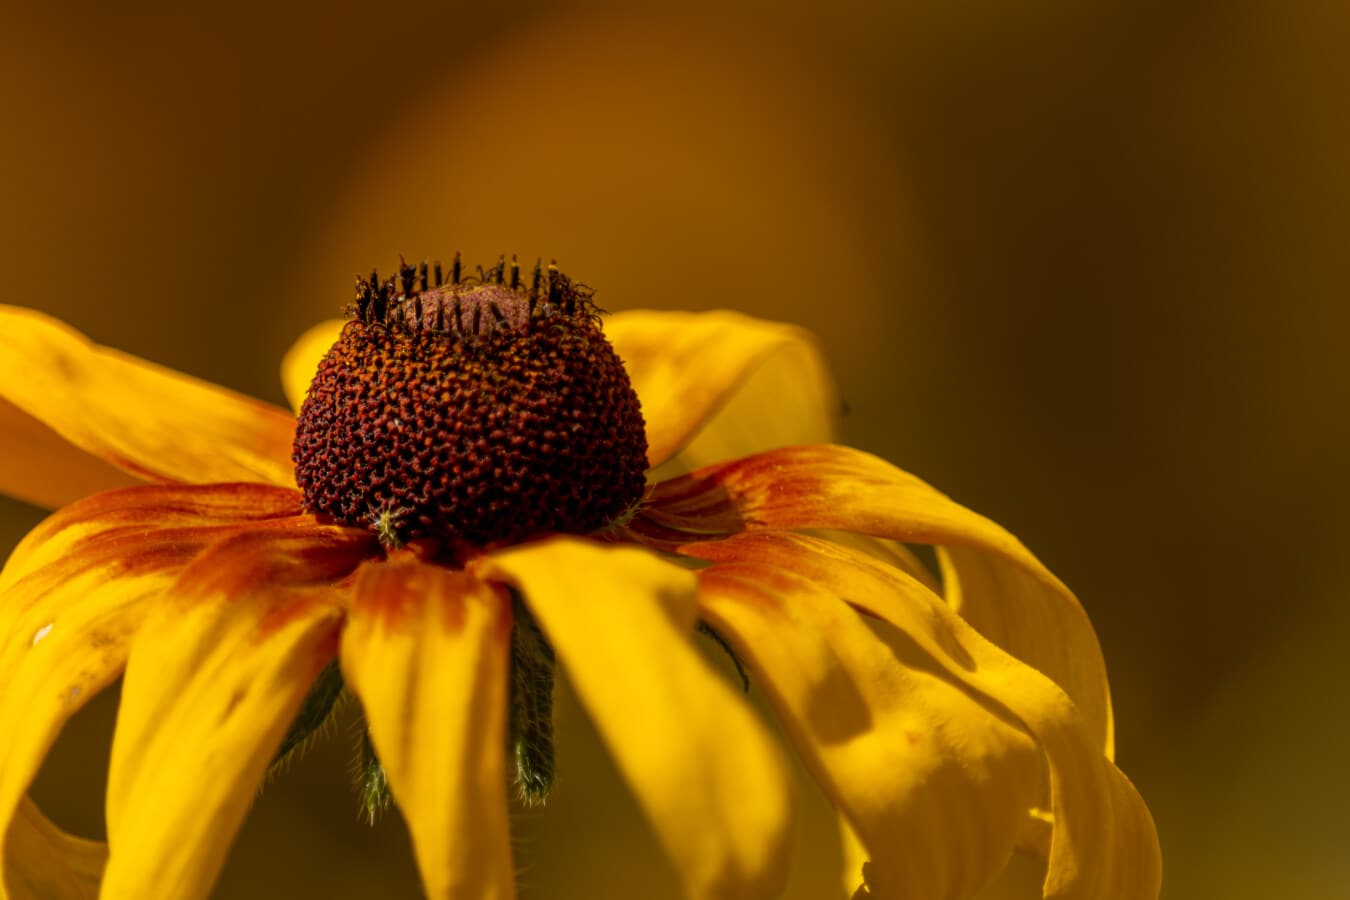 close-up, flower, pistil, petals, orange yellow, petal, pollen, color, blossom, natural